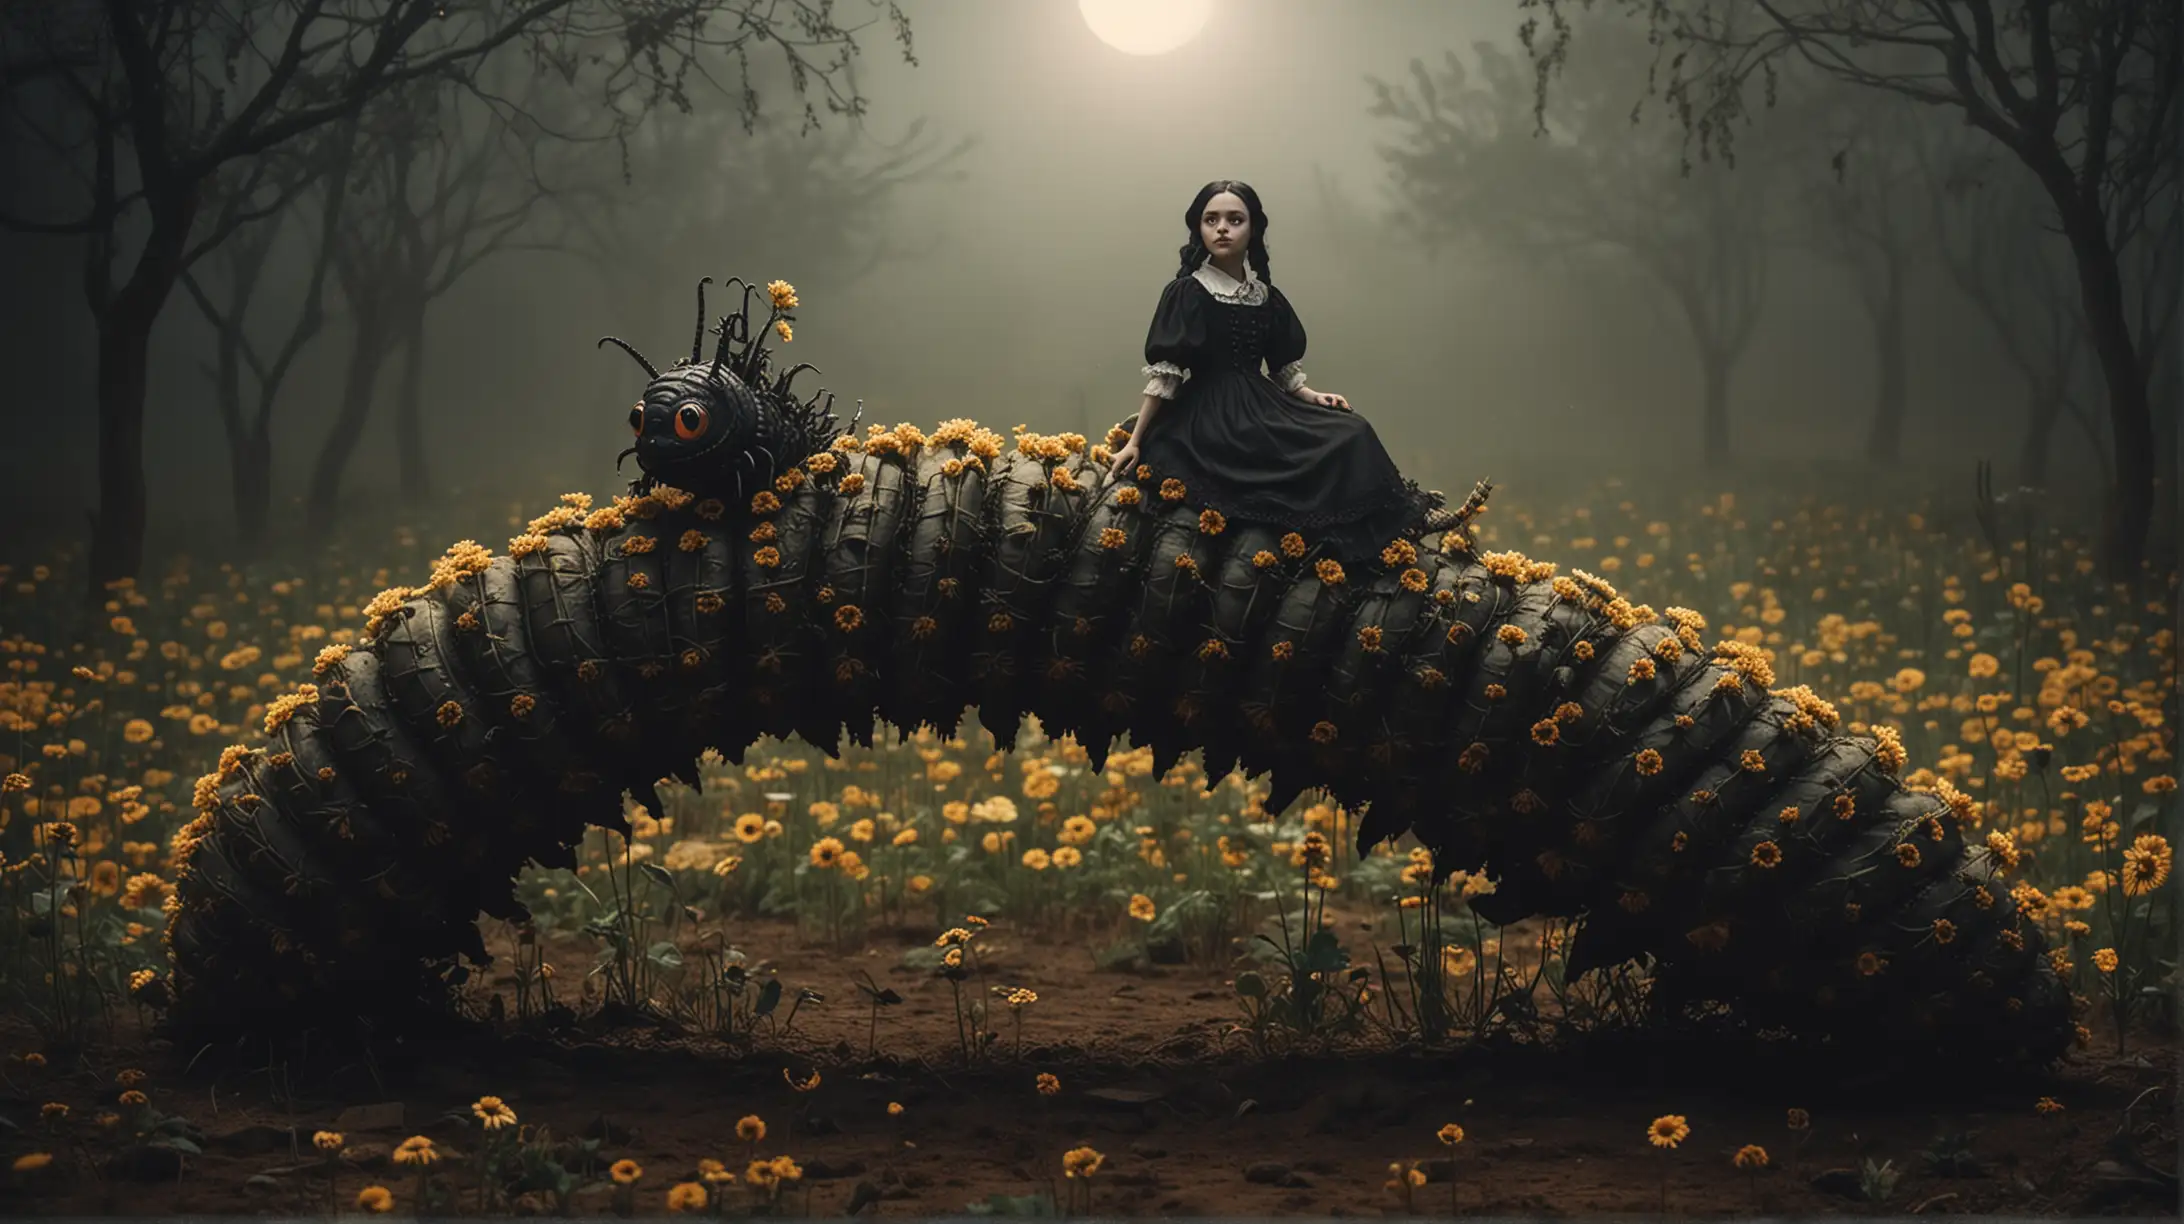 Dark Moody Full Body Image of Wednesday Adams Riding Giant Caterpillar Over Dry Sunflower Garden at Night